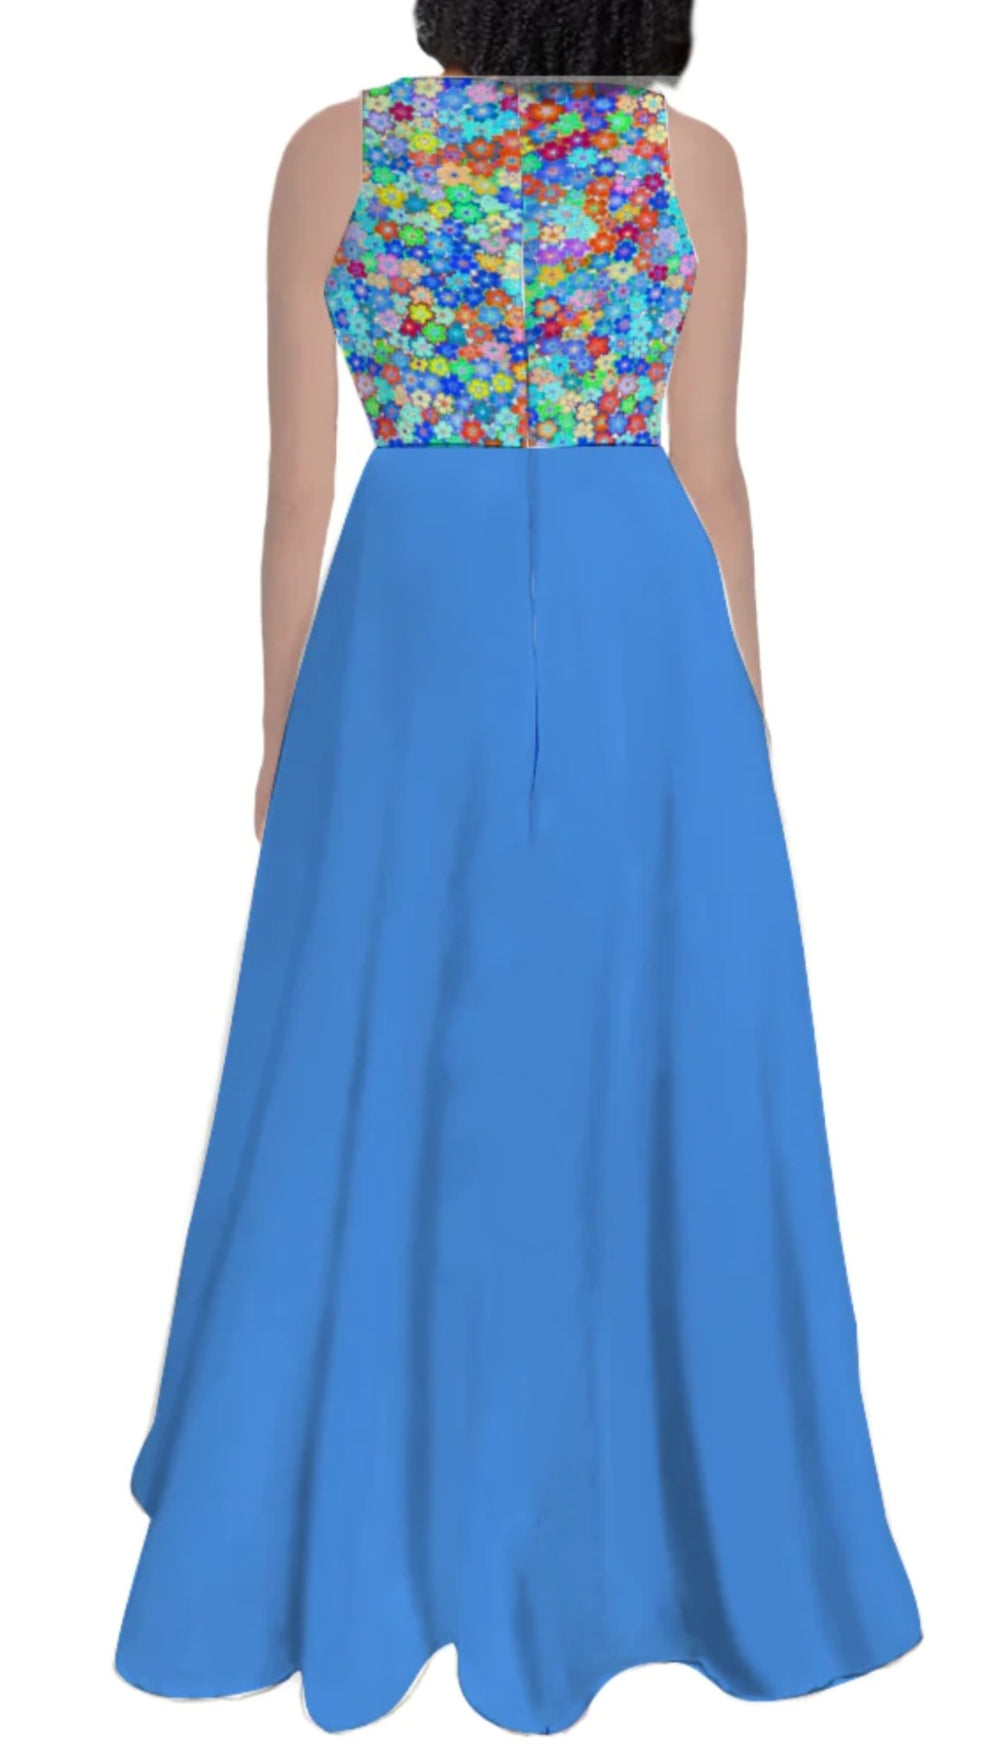 Ti Amo I love you Exclusive Brand - Steel Blue & Colorful Flowers - Sleeveless Classic Elegant Maxi Dress